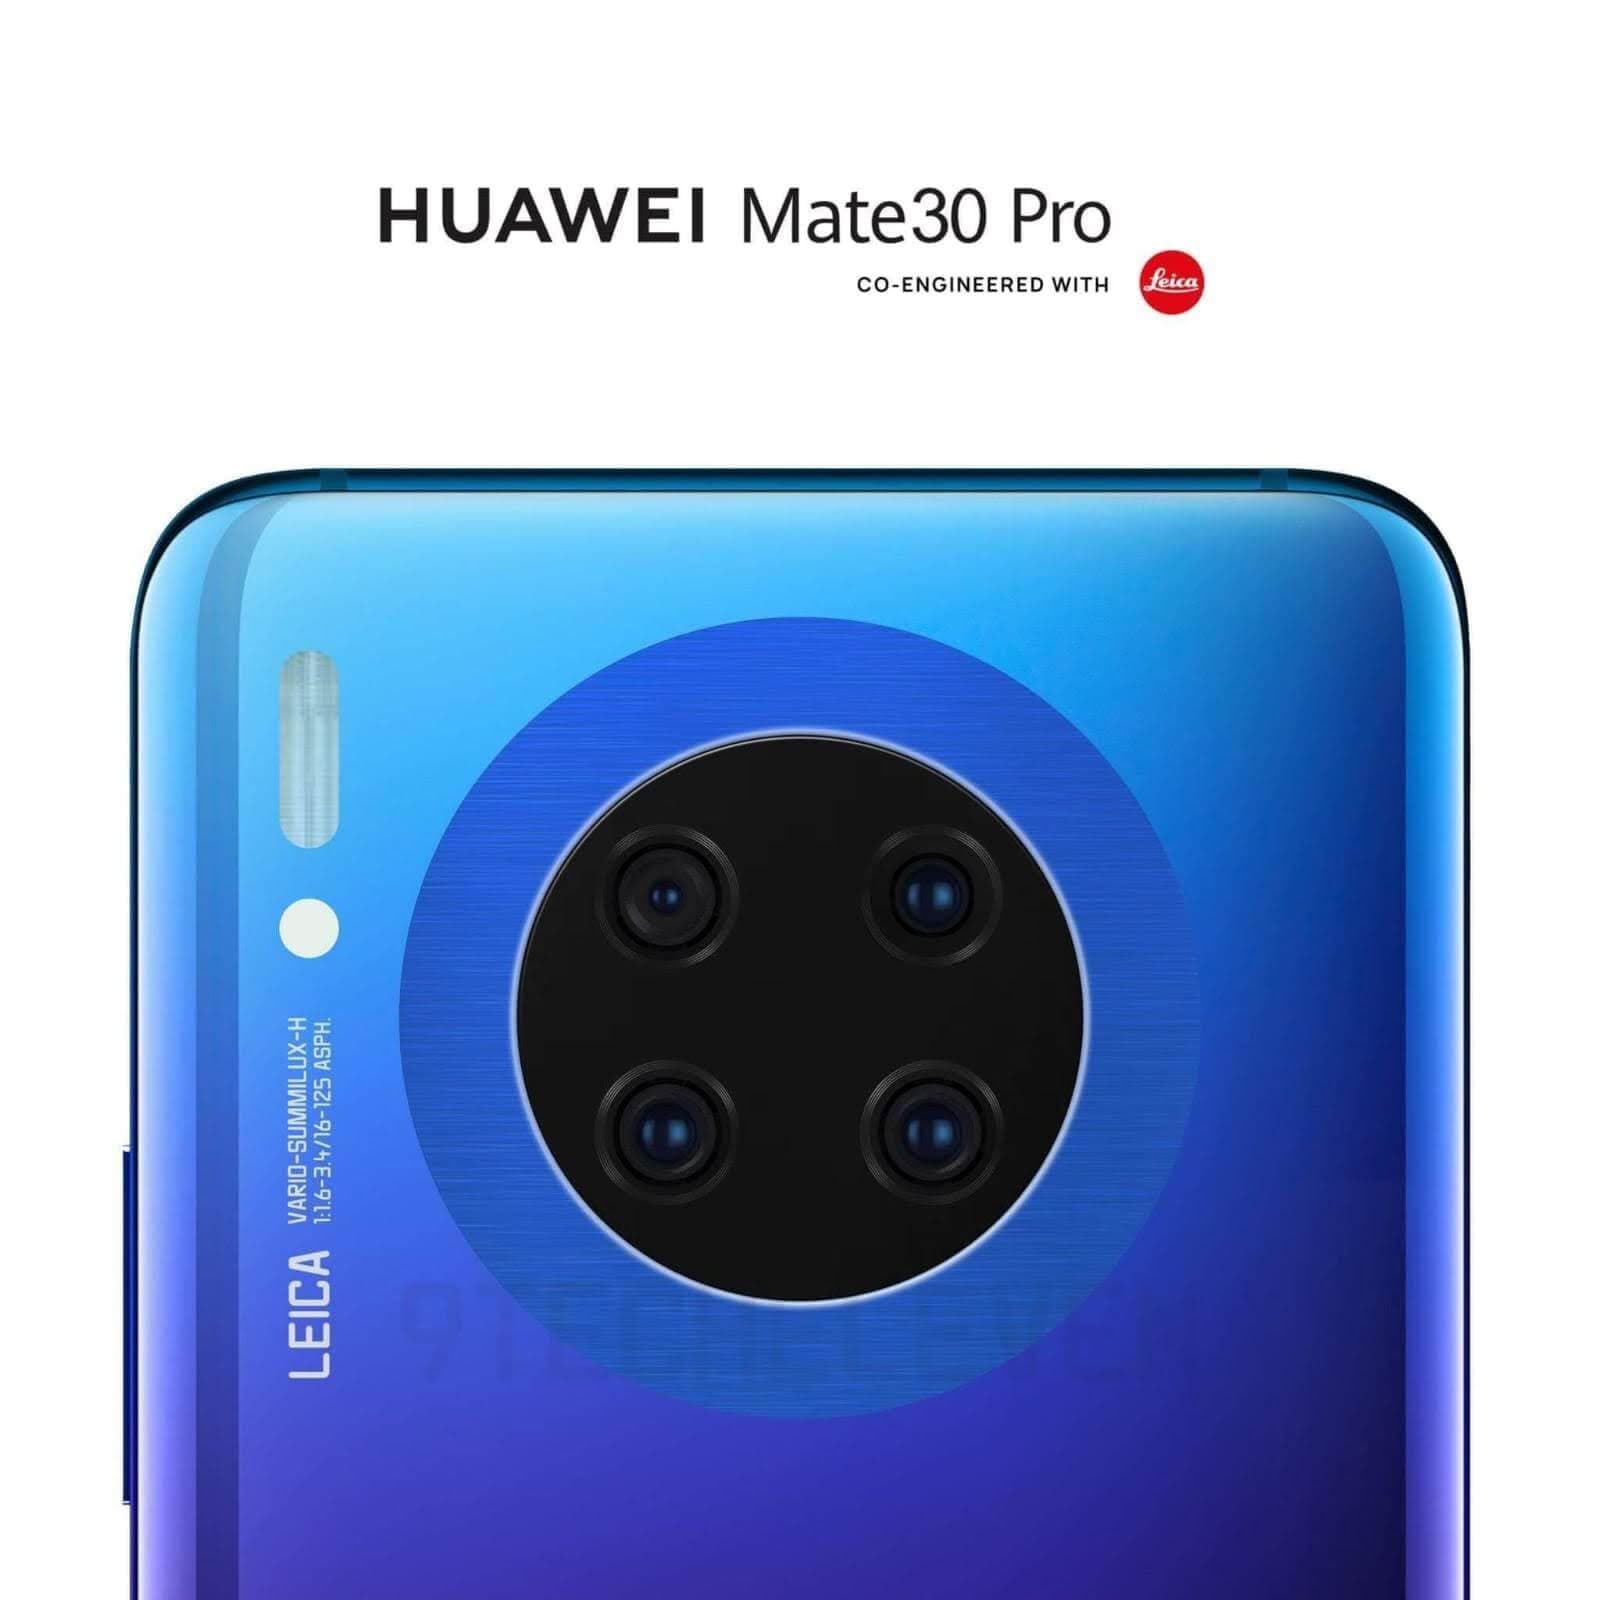 Huawei Mate 30 Pro: بعض العروض غير الرسمية تتناقض مع بعضها البعض (الصورة) 118